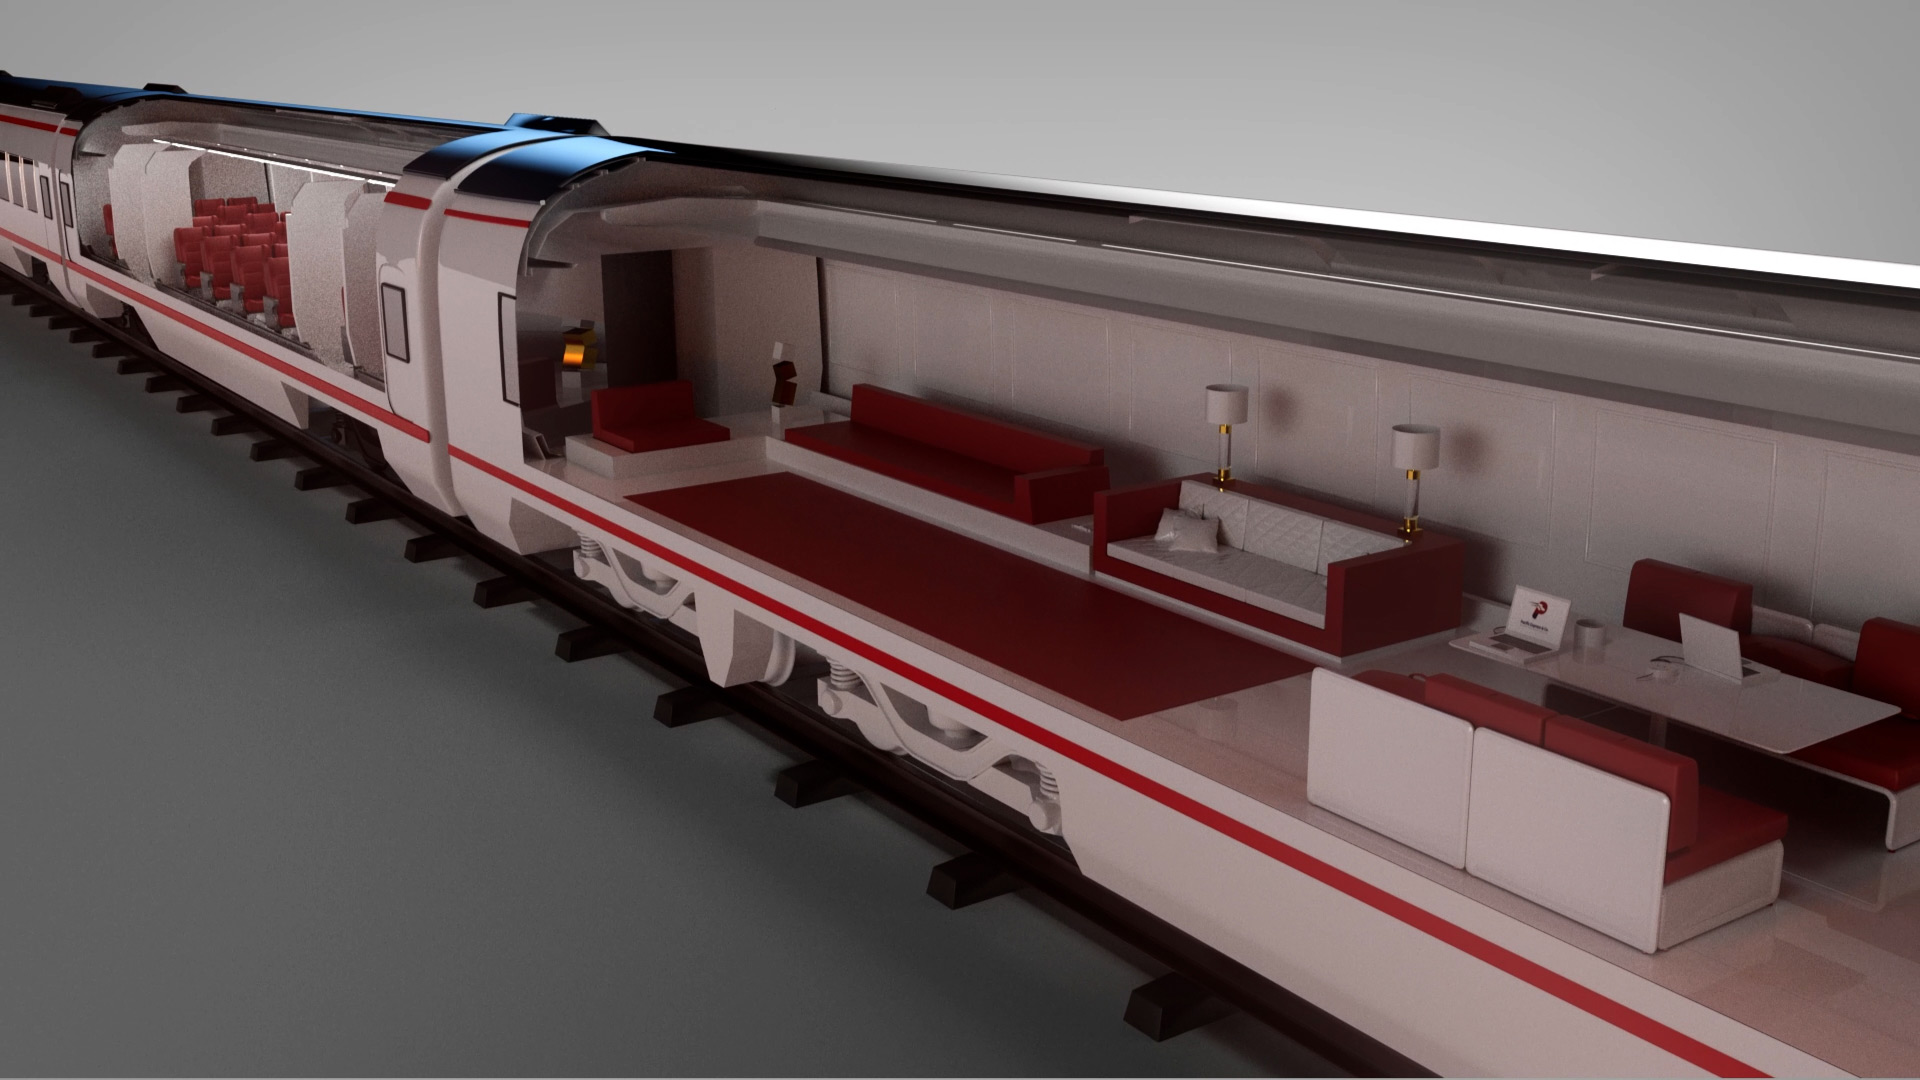 Train interior design